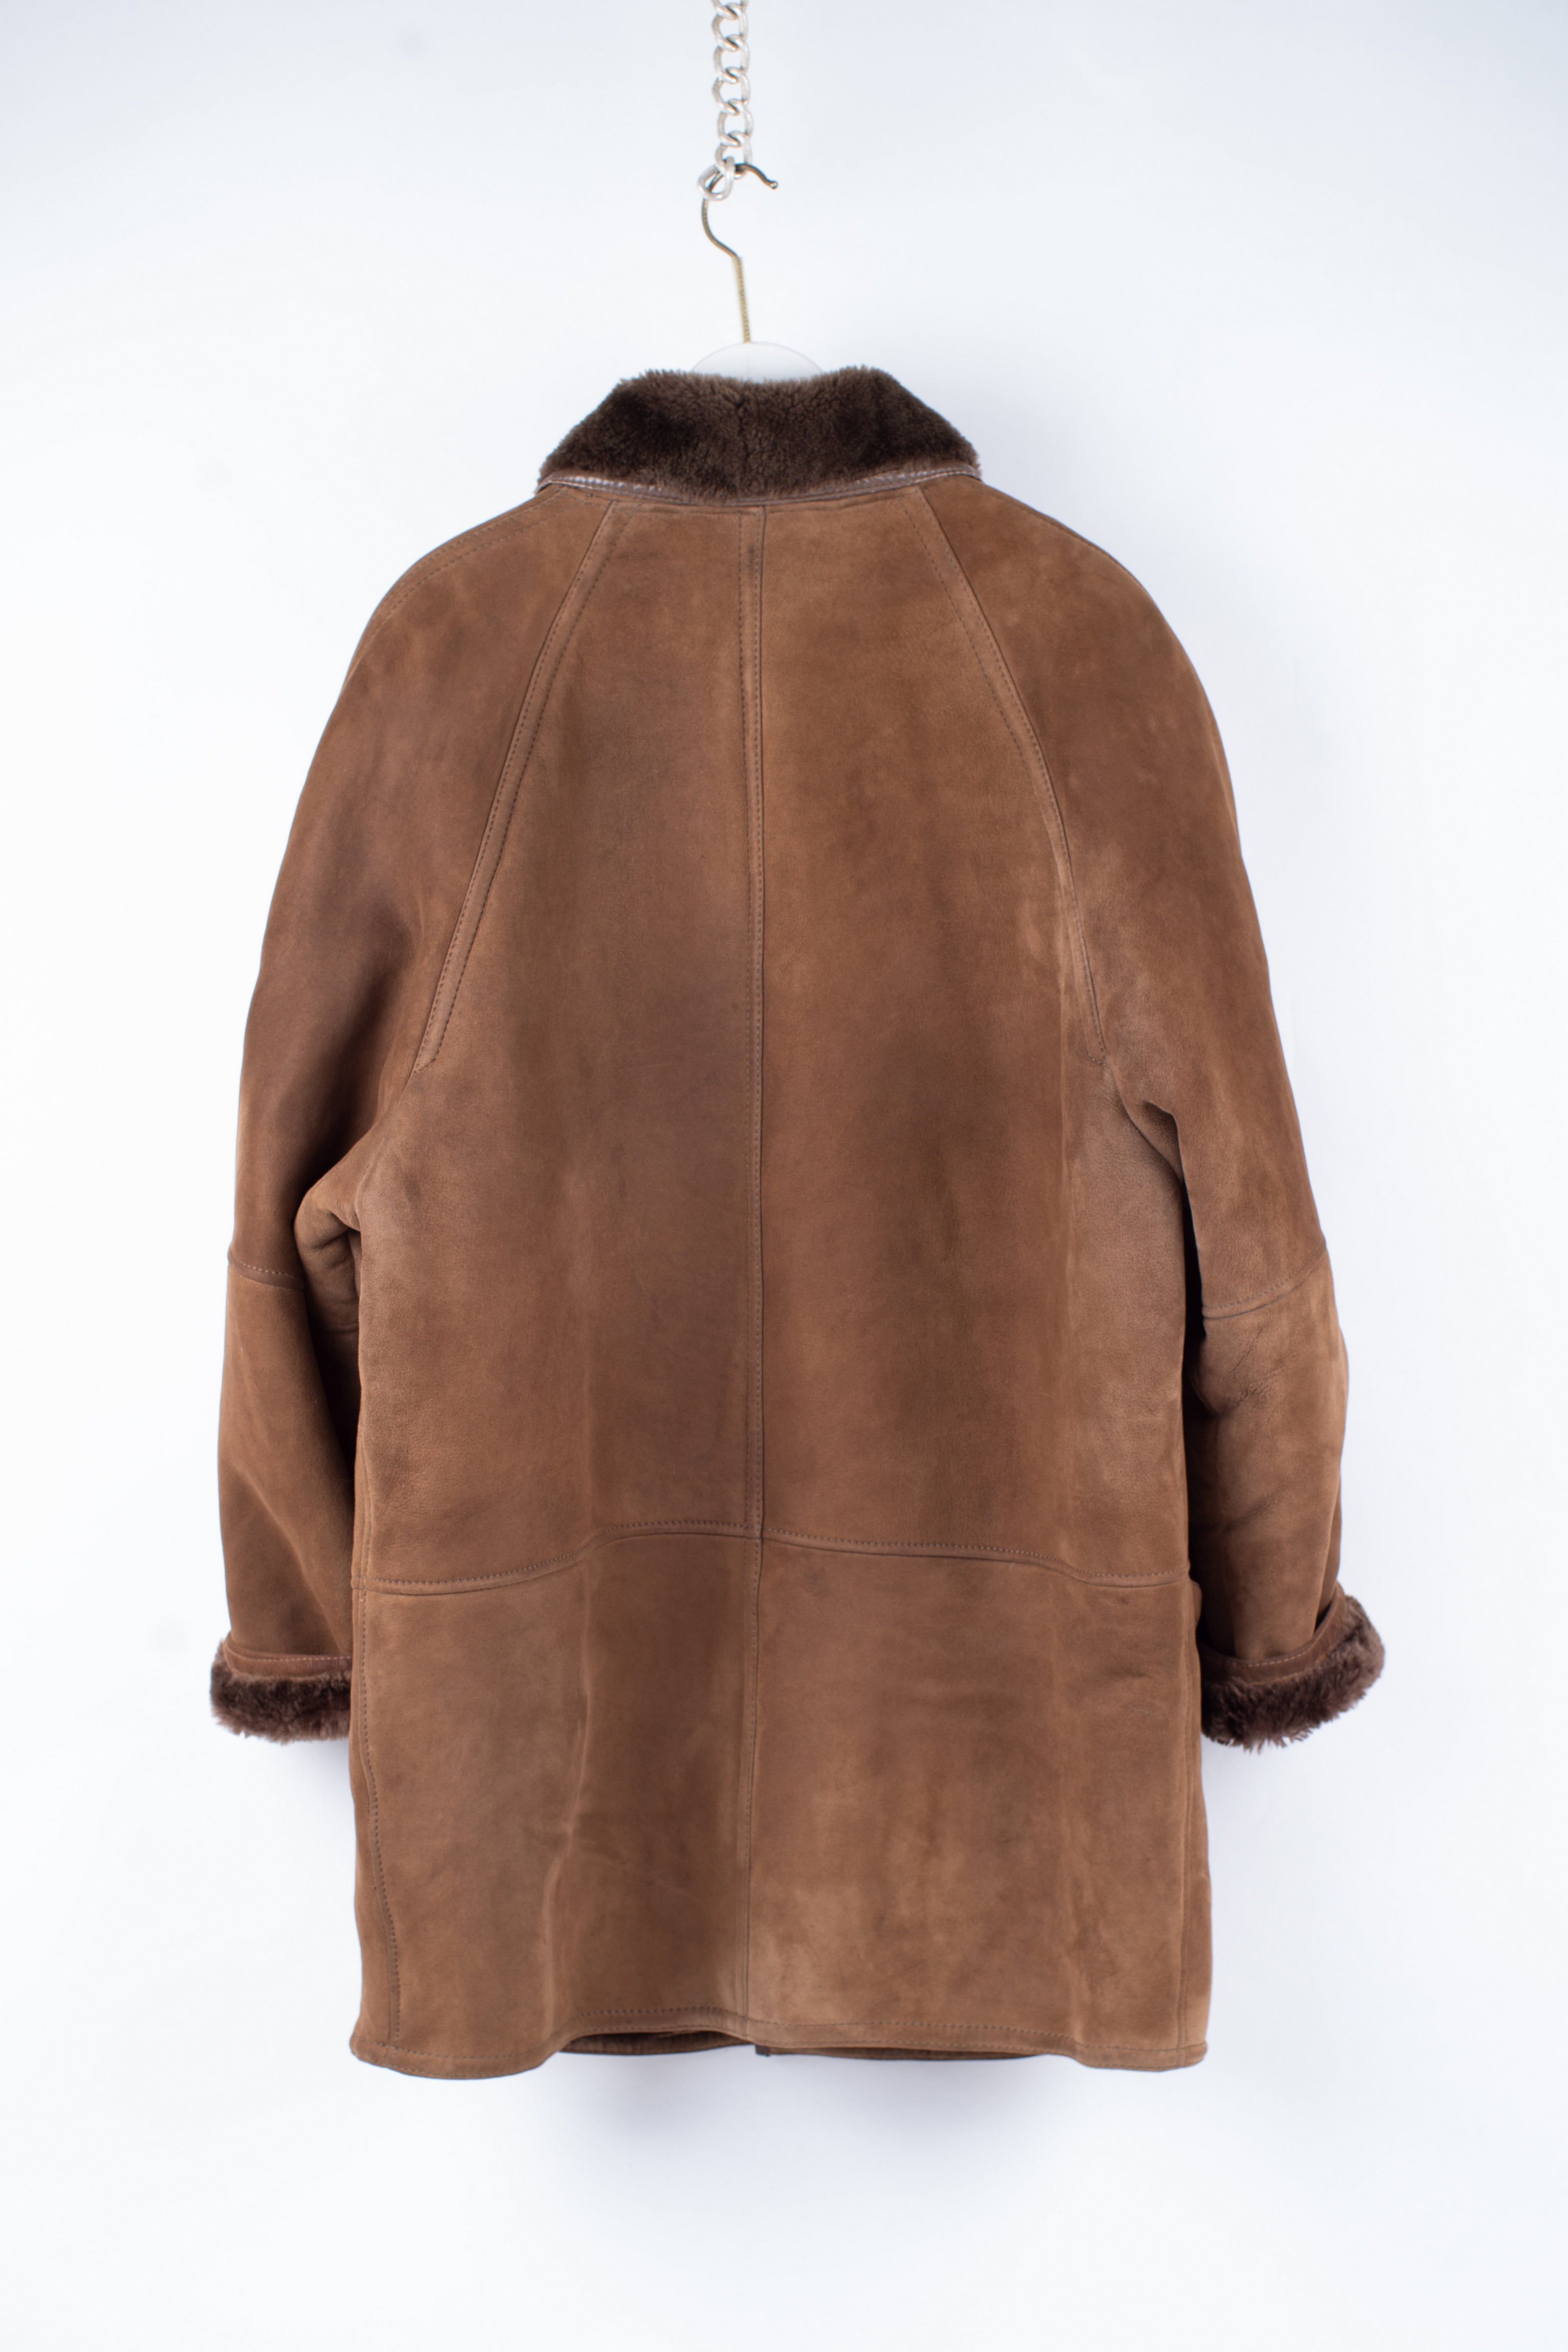 Men's Mabrun Brown Shearling Coat with Shawl Collar, Men's L